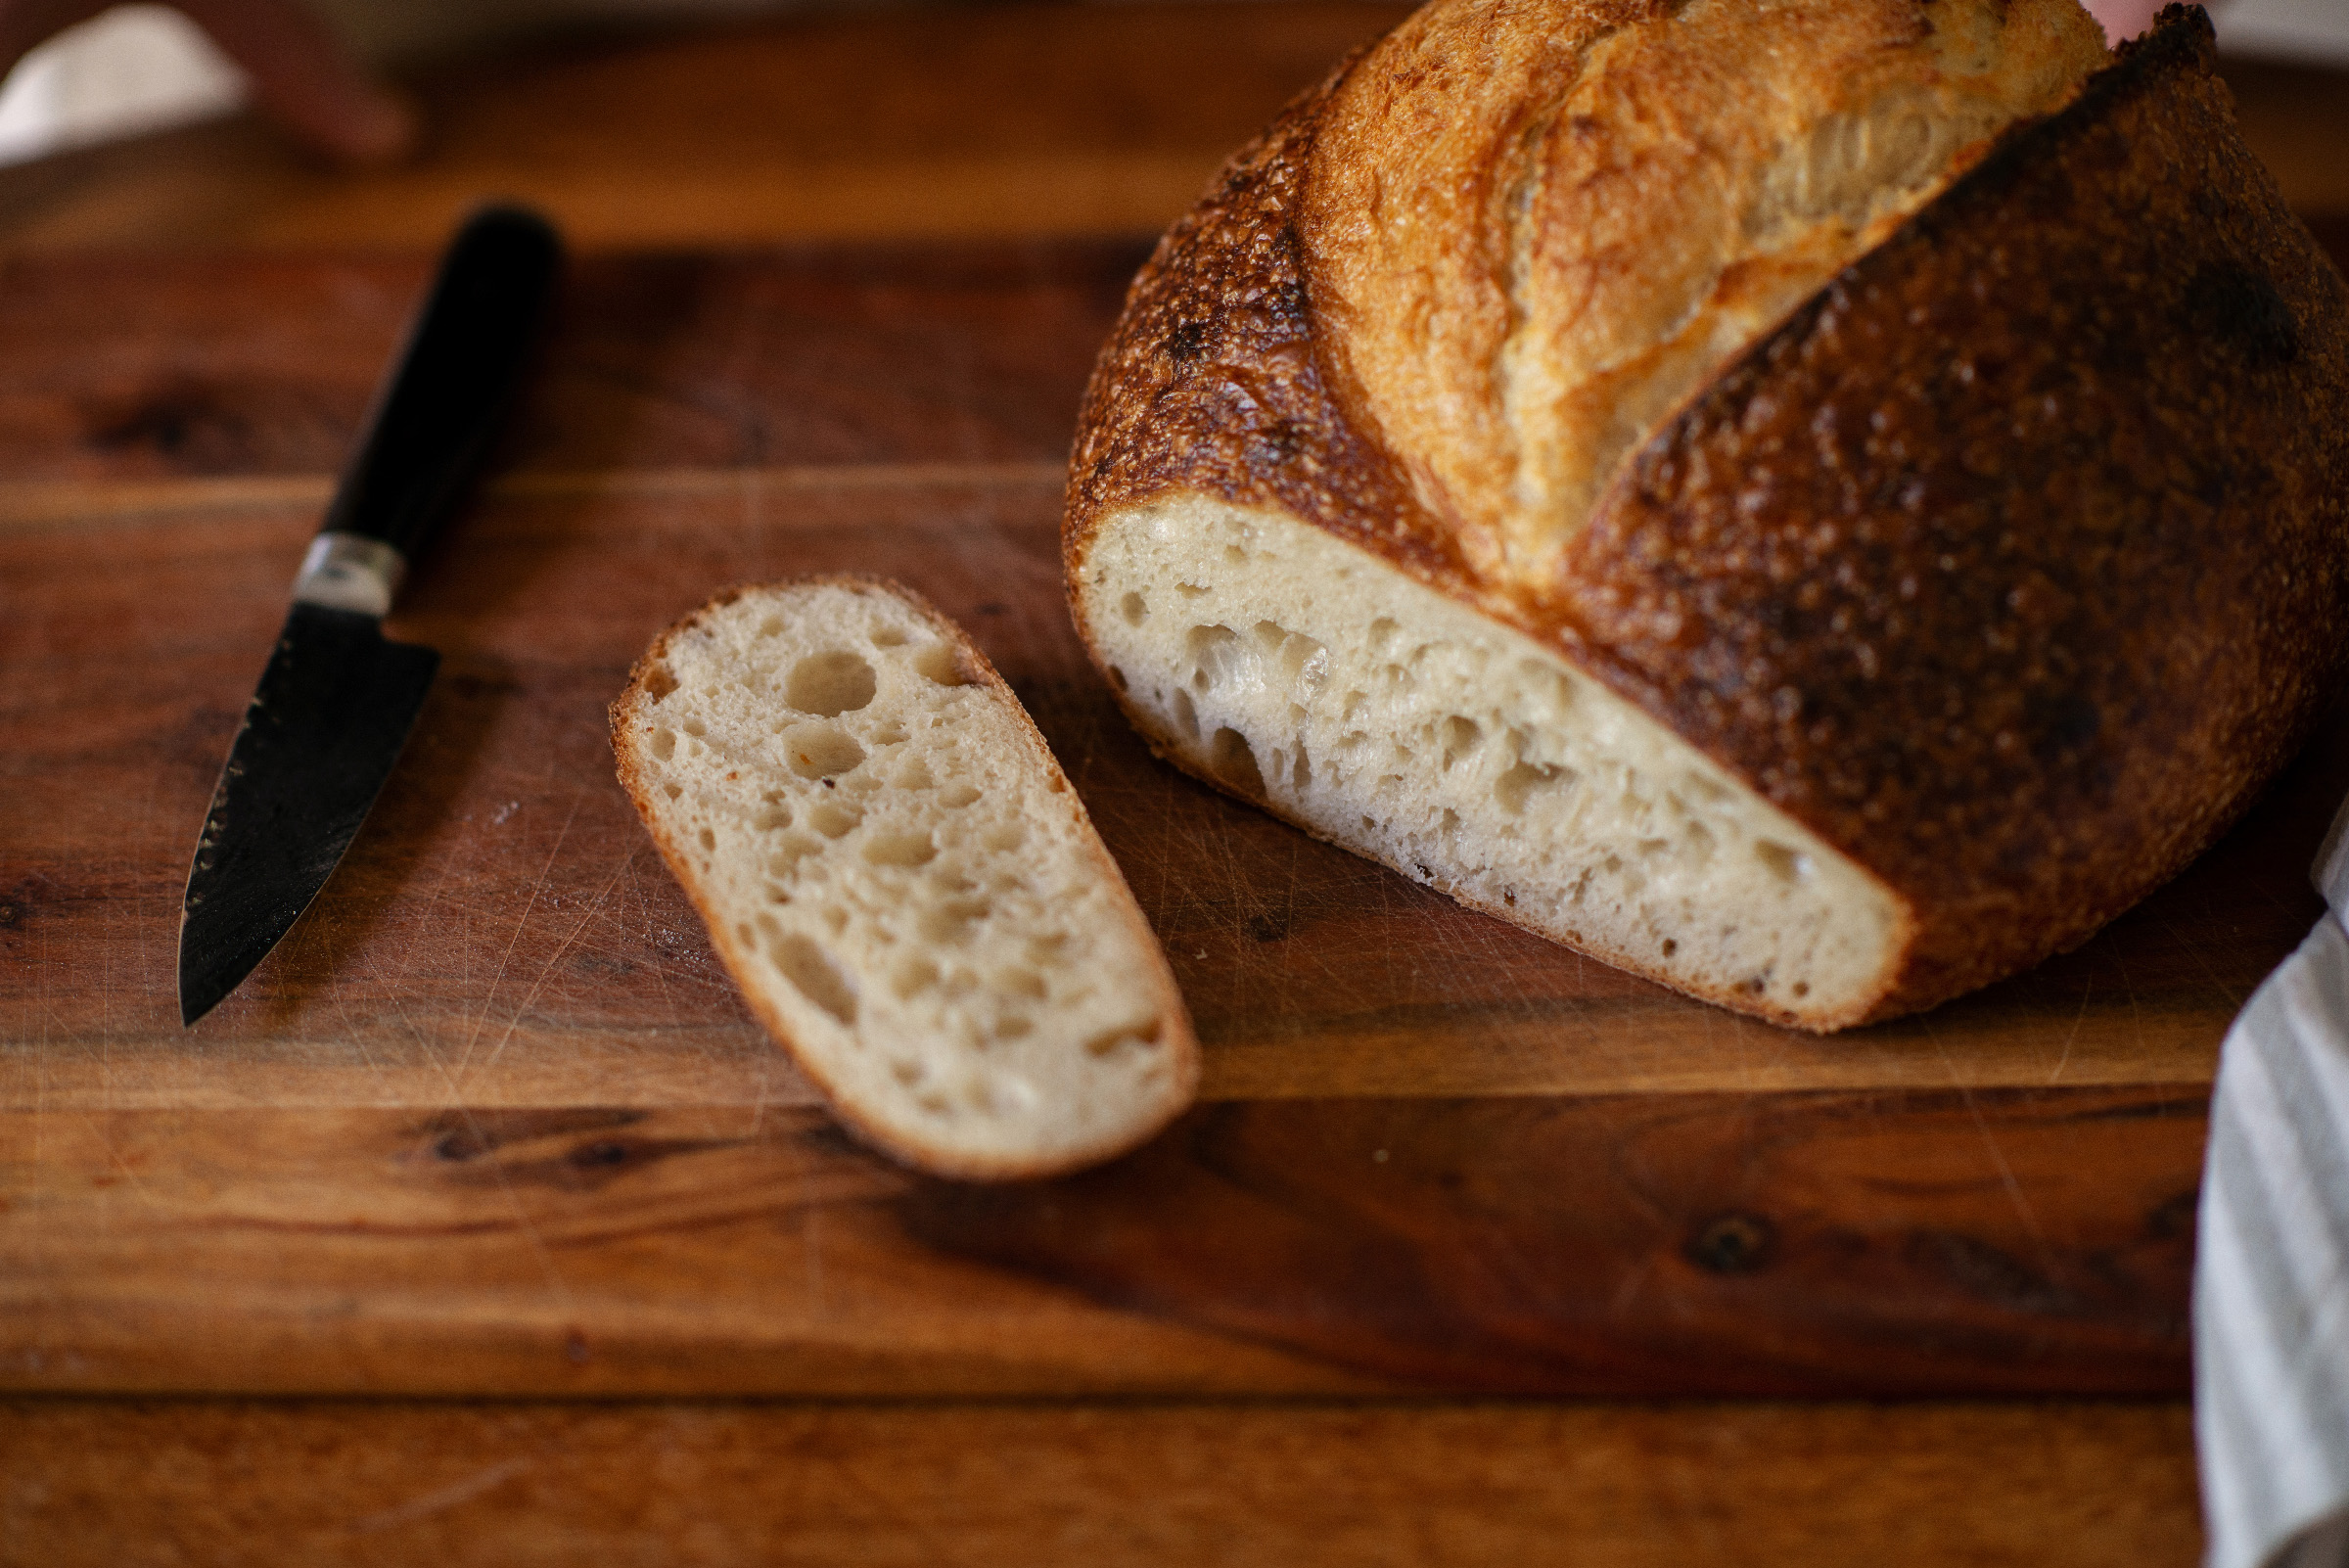 Freshly cut Artisan Sourdough bread and a knife sit on a wooden chopping board